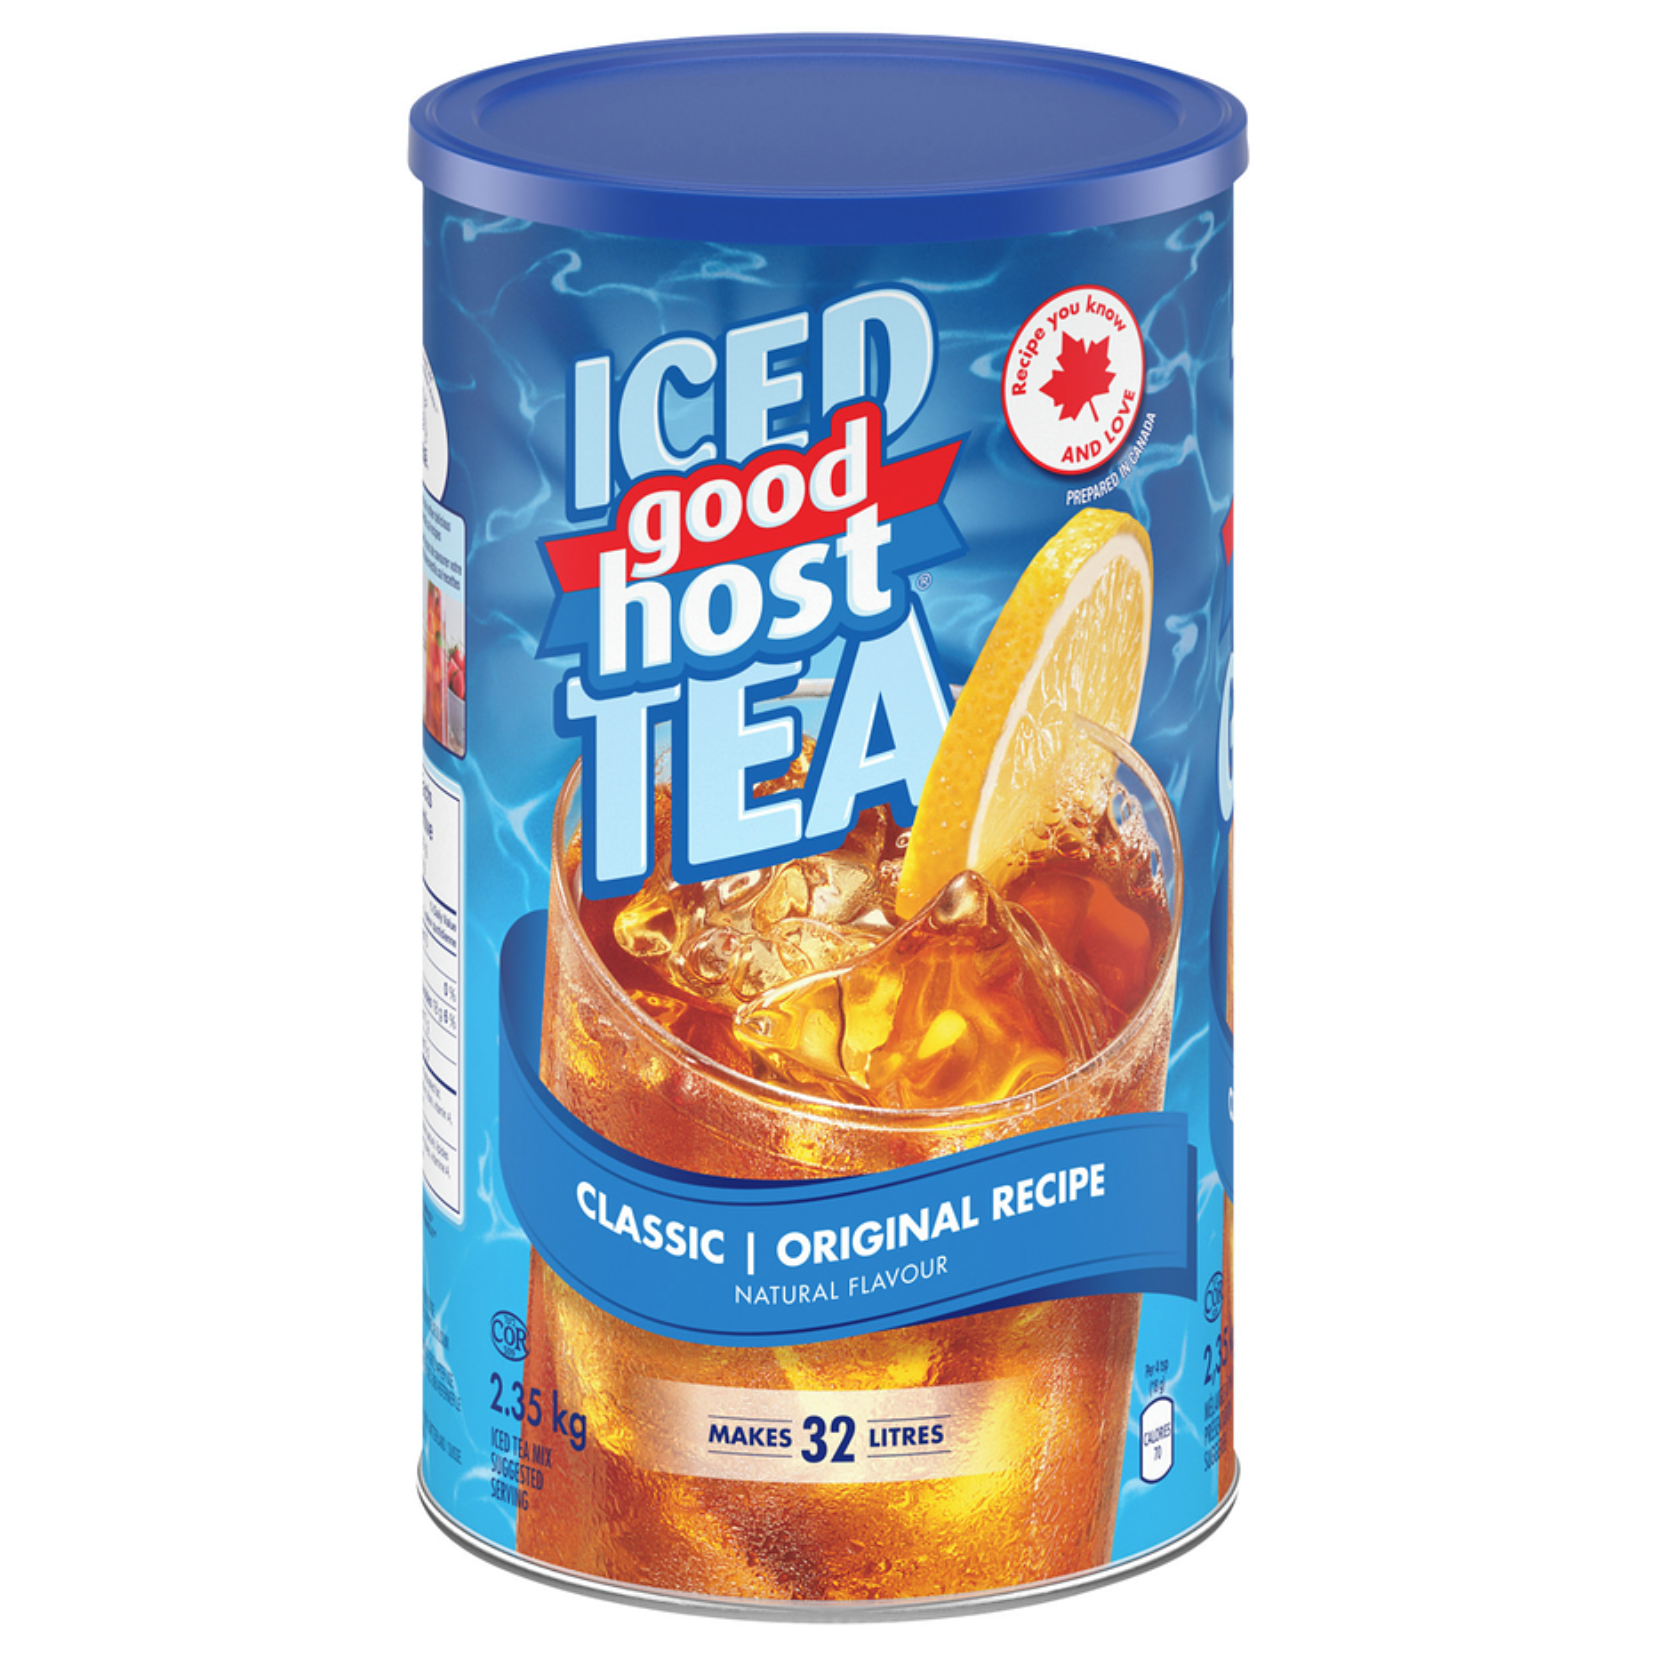 Goodhost Original Iced Tea 2.35 kg